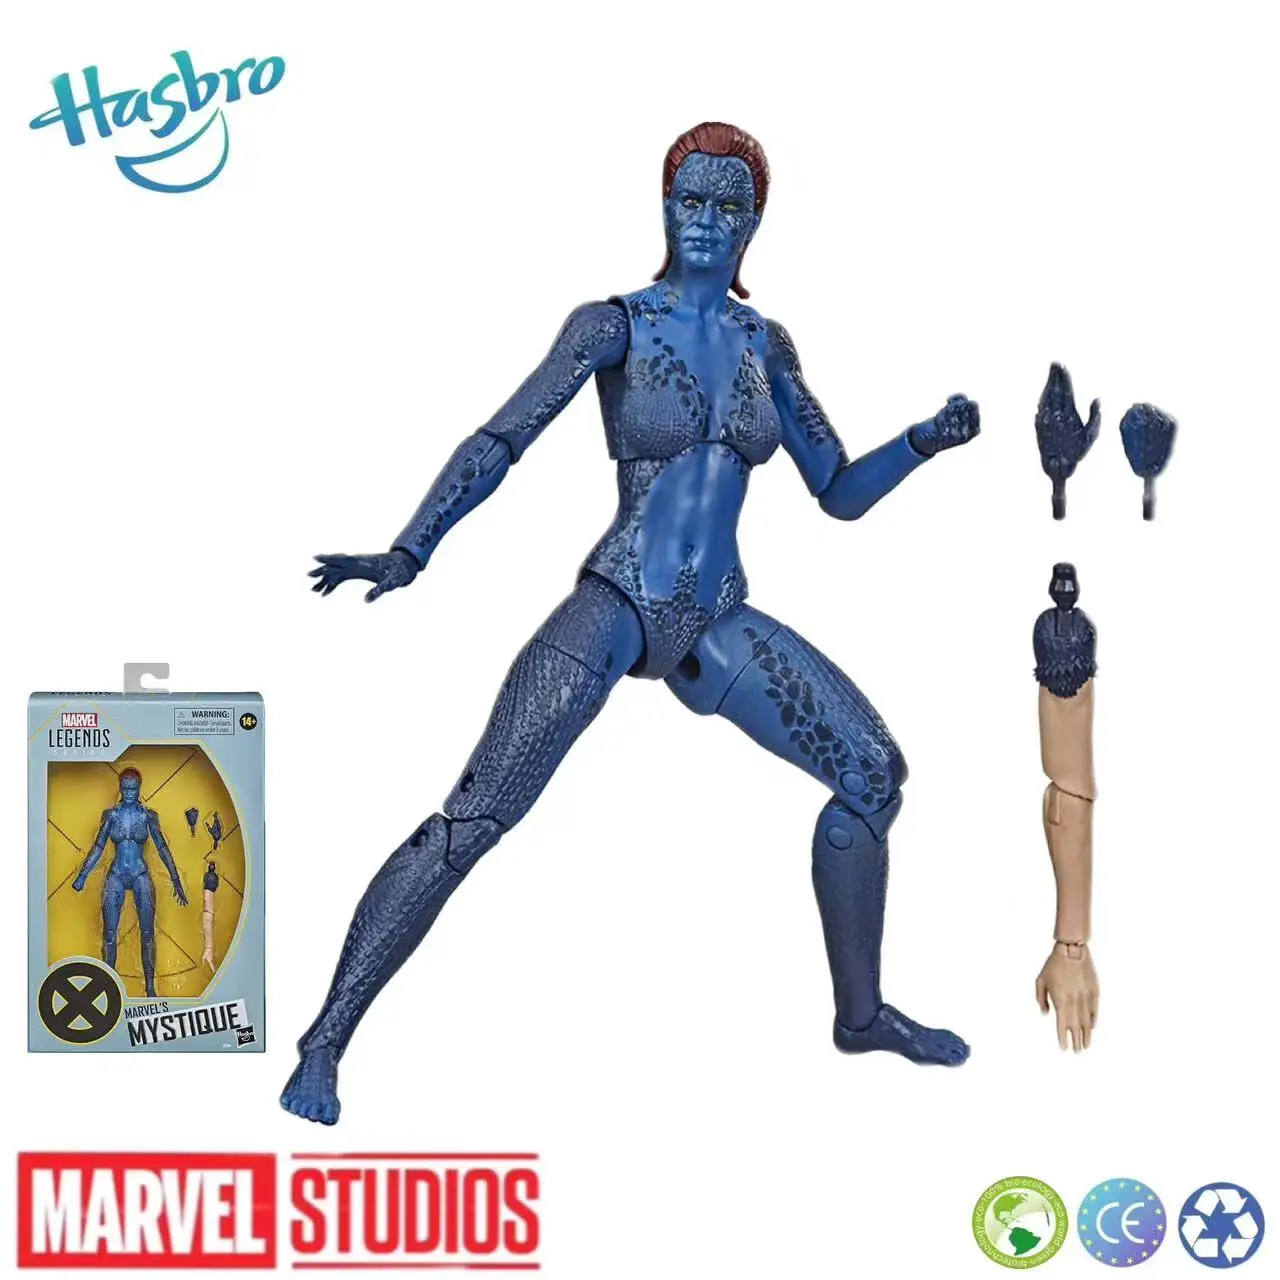 

Hasbro Marvel Legends X-Men Mystique Action Figure Toys for Children with Box Original 6inch Children's Gifts